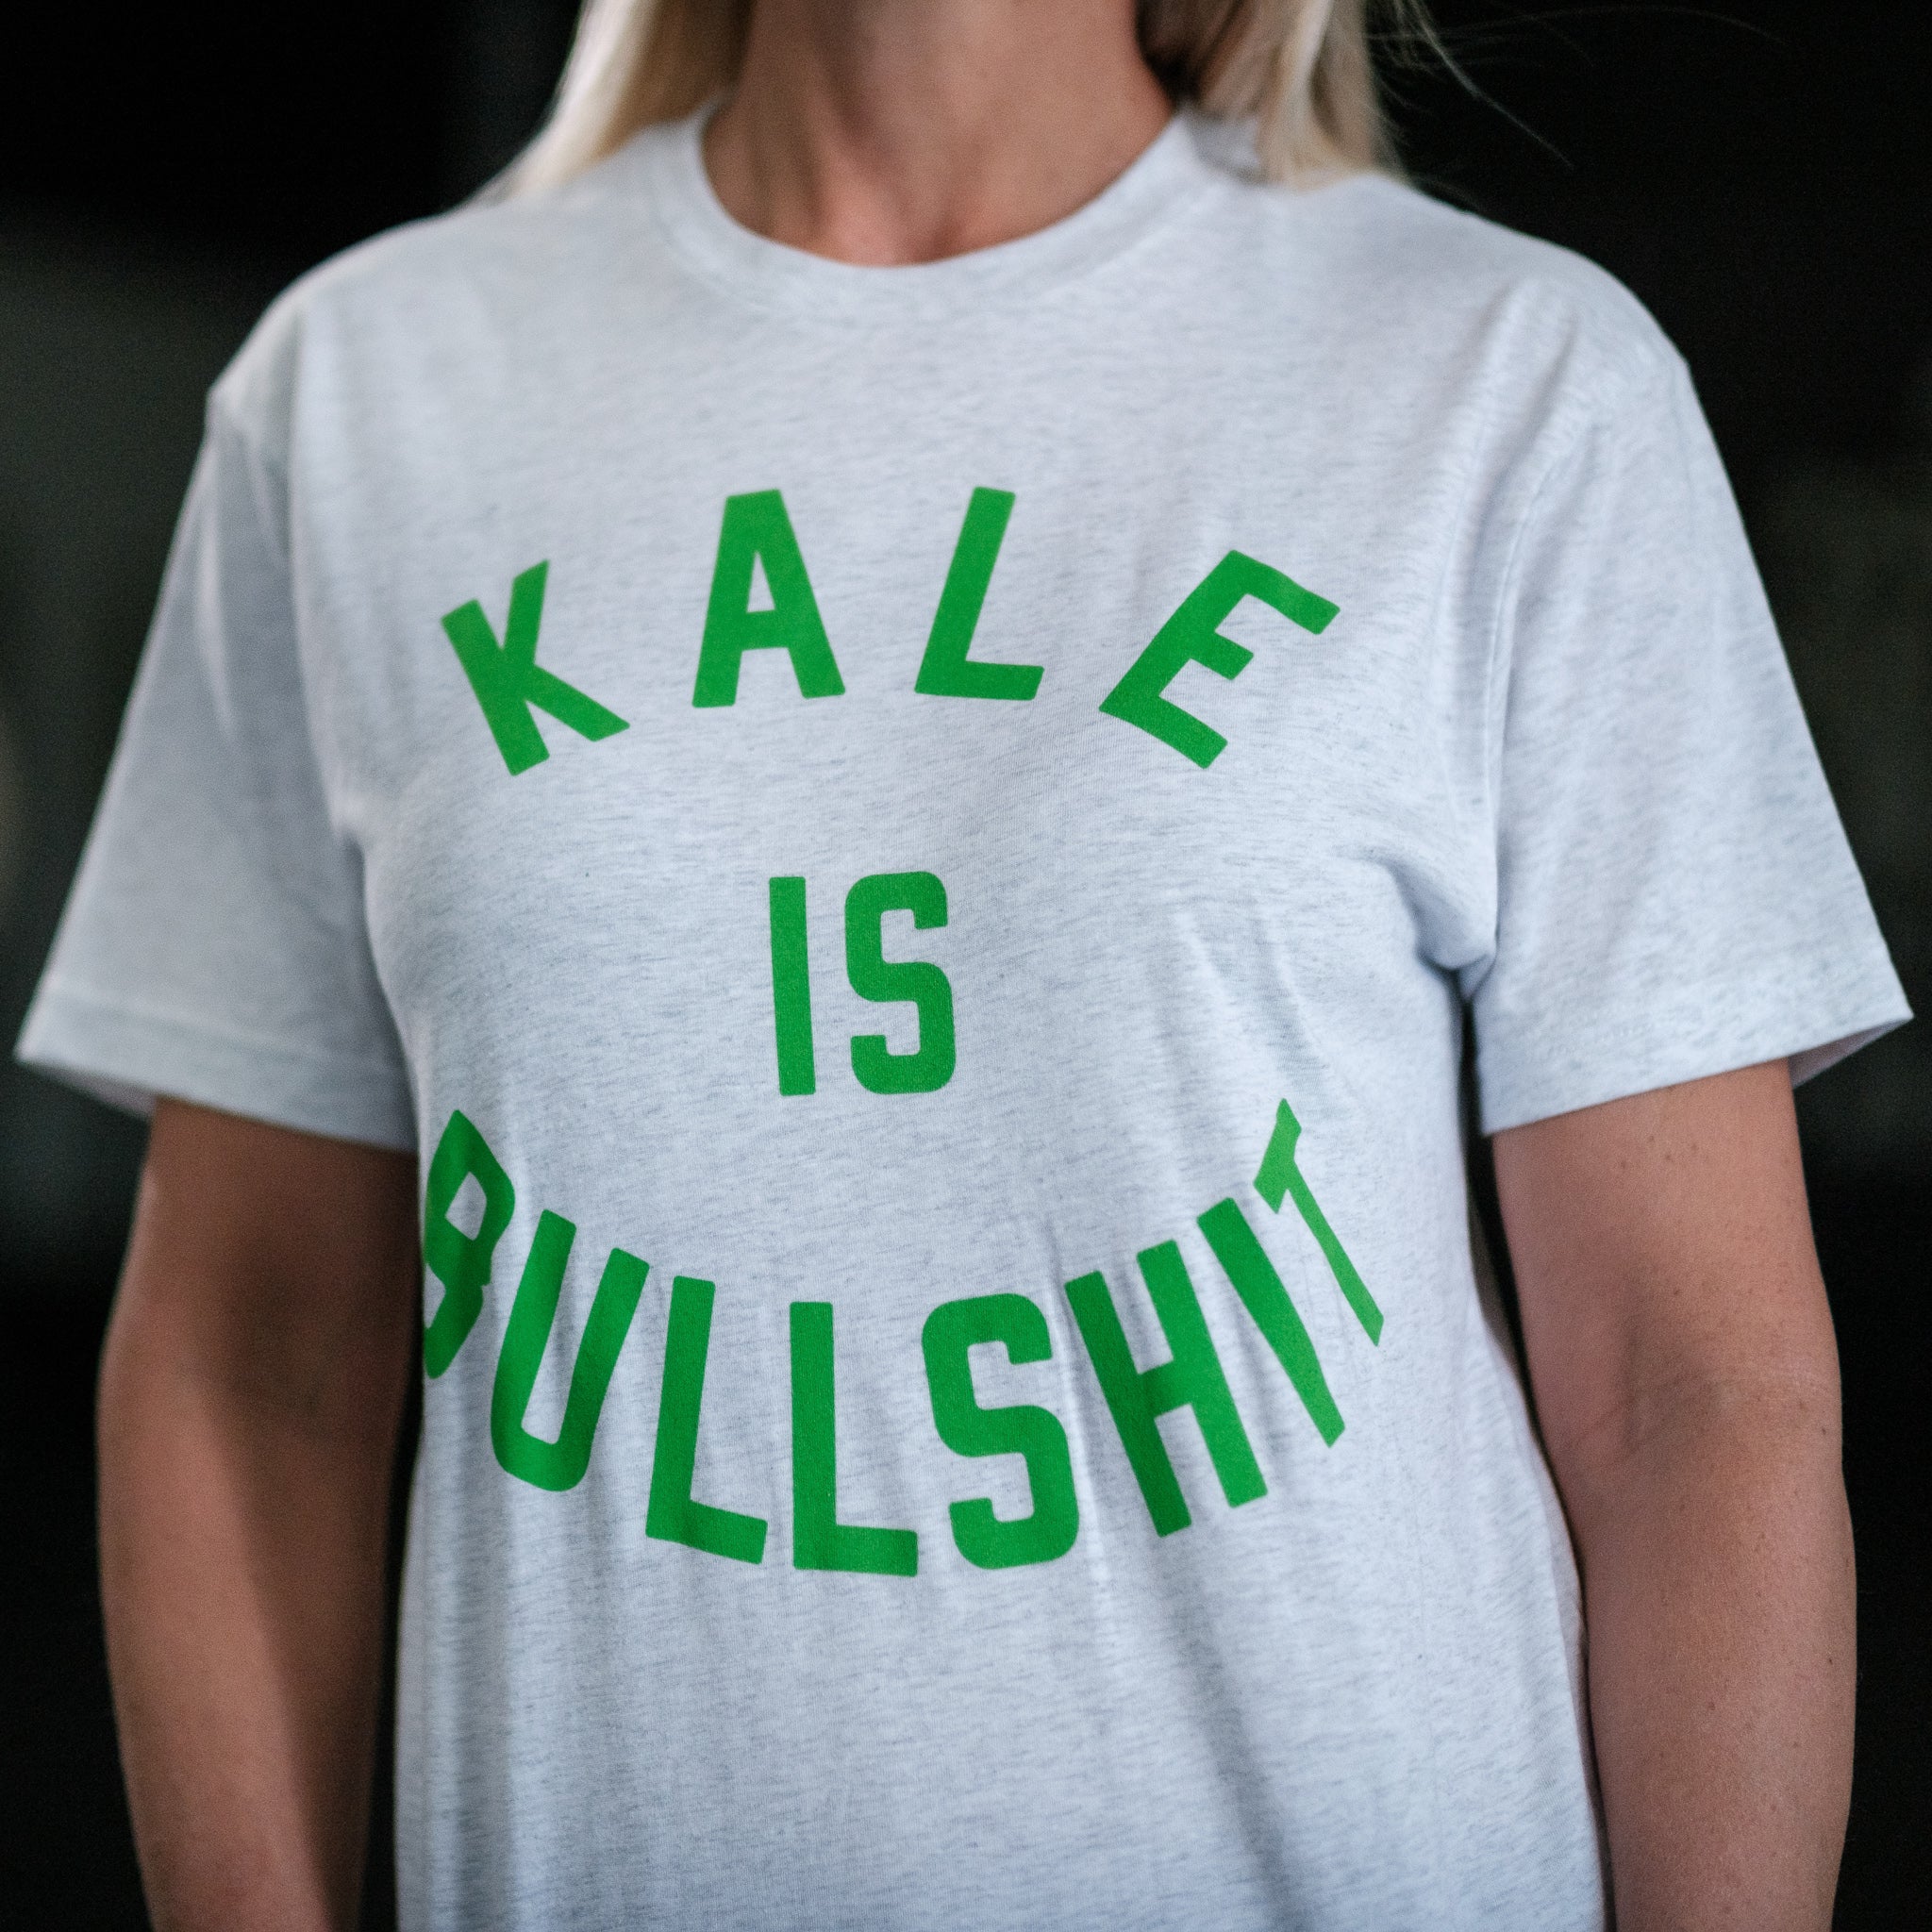 Kale is Bullshit - Tee